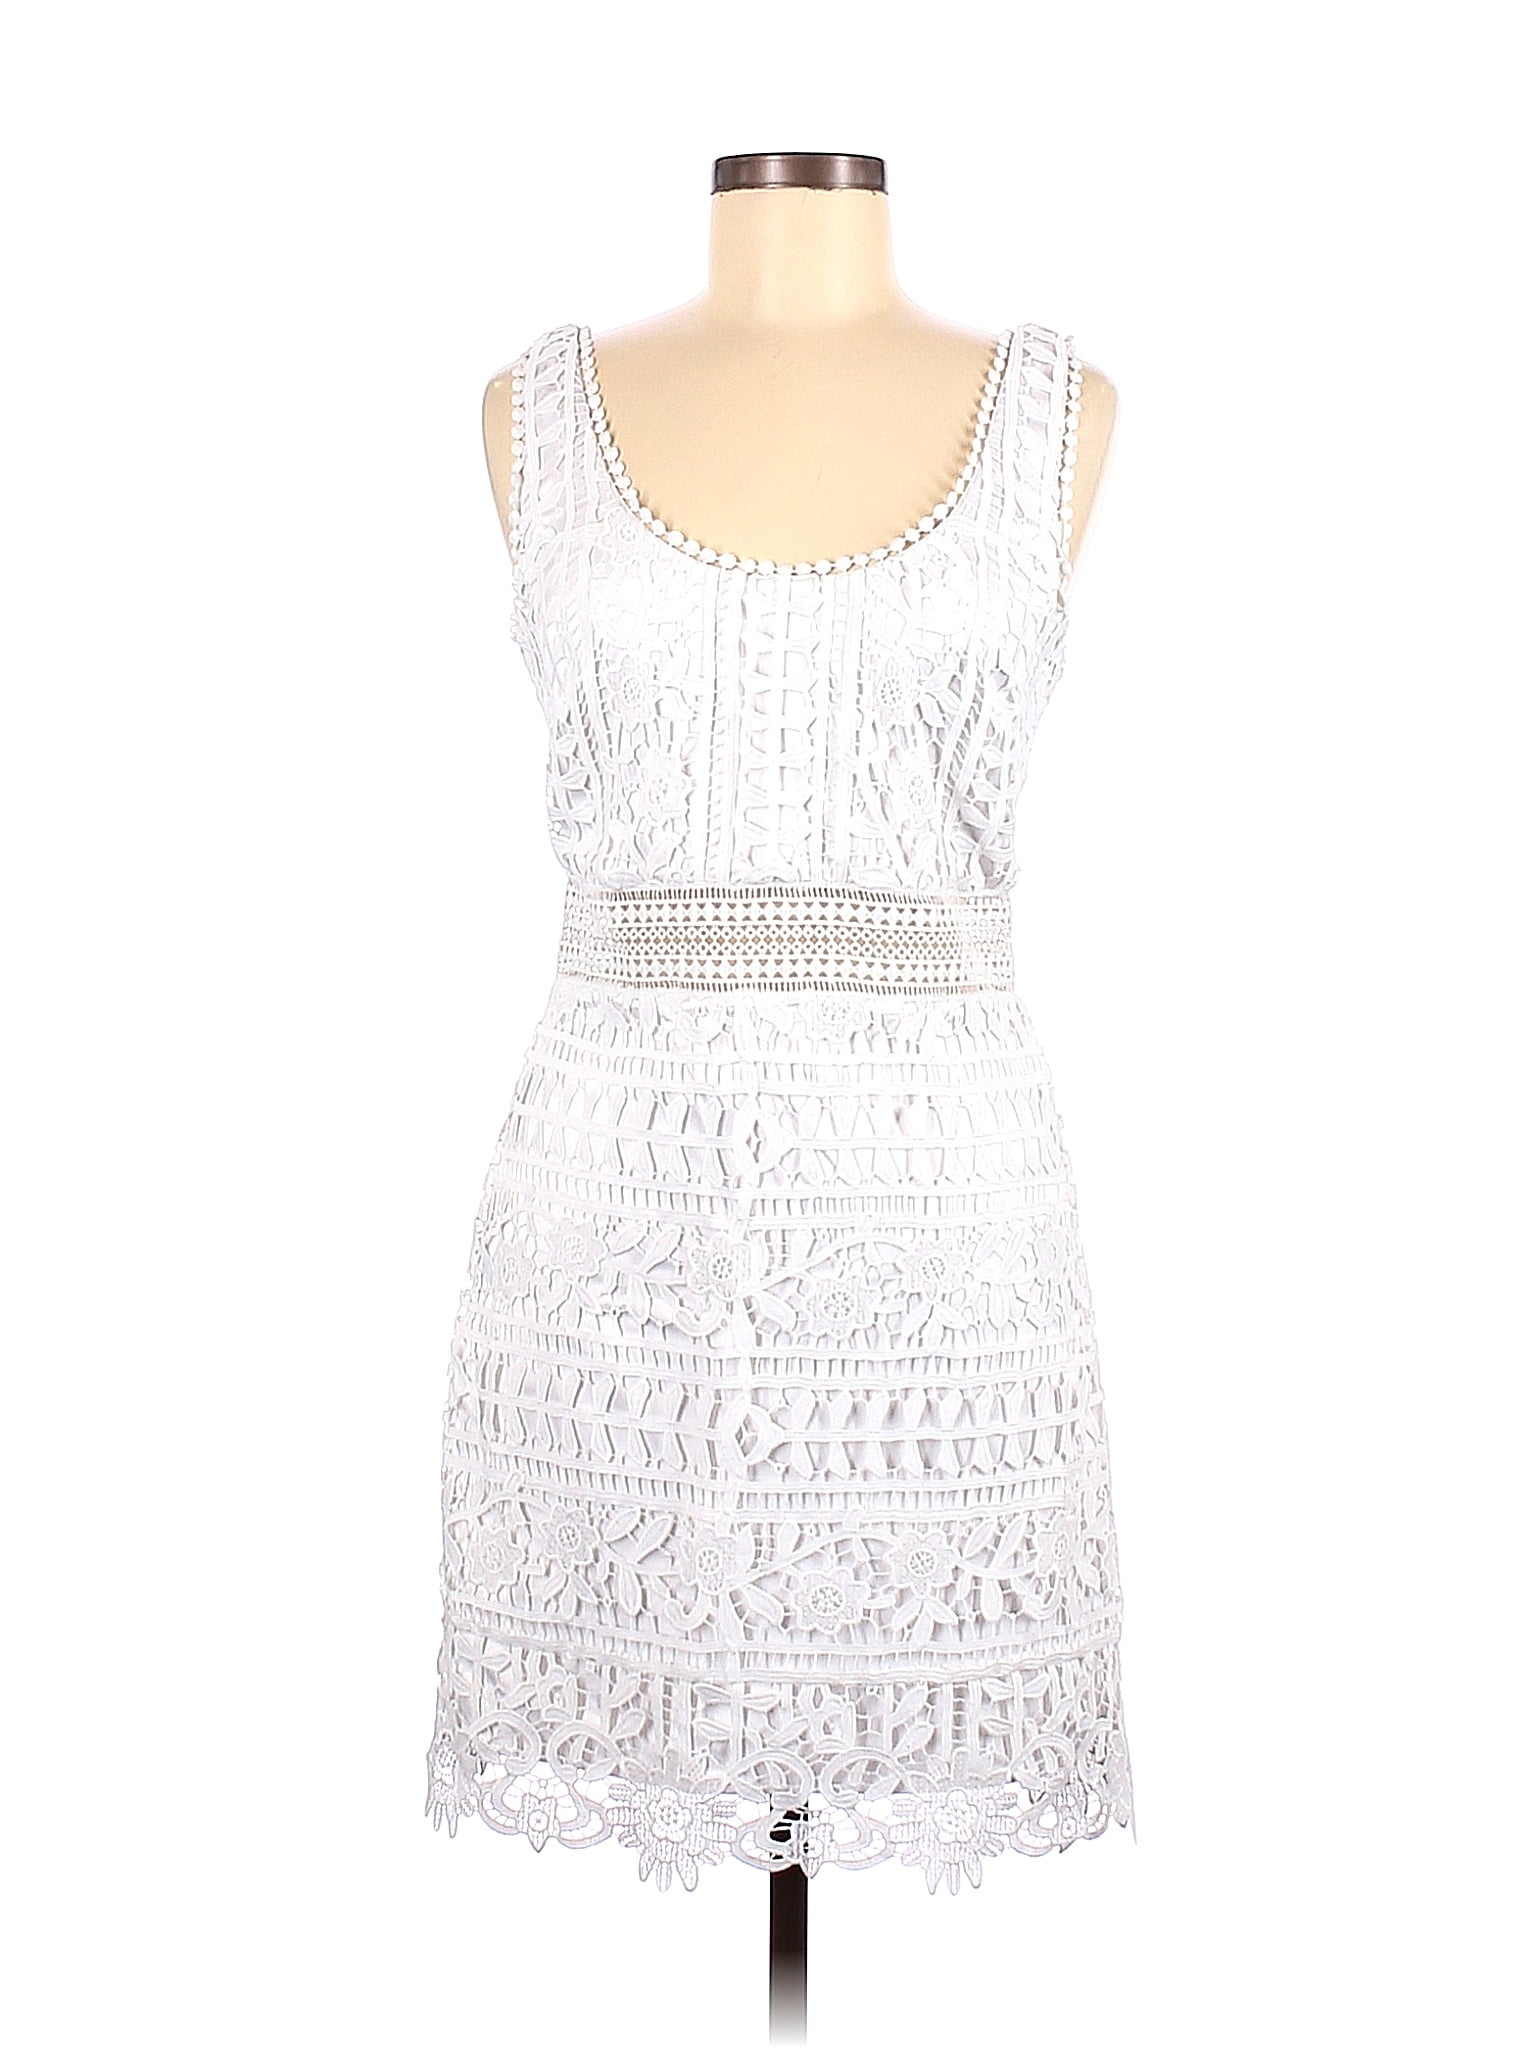 Bebe Solid White Cocktail Dress Size 8 - 76% off | thredUP